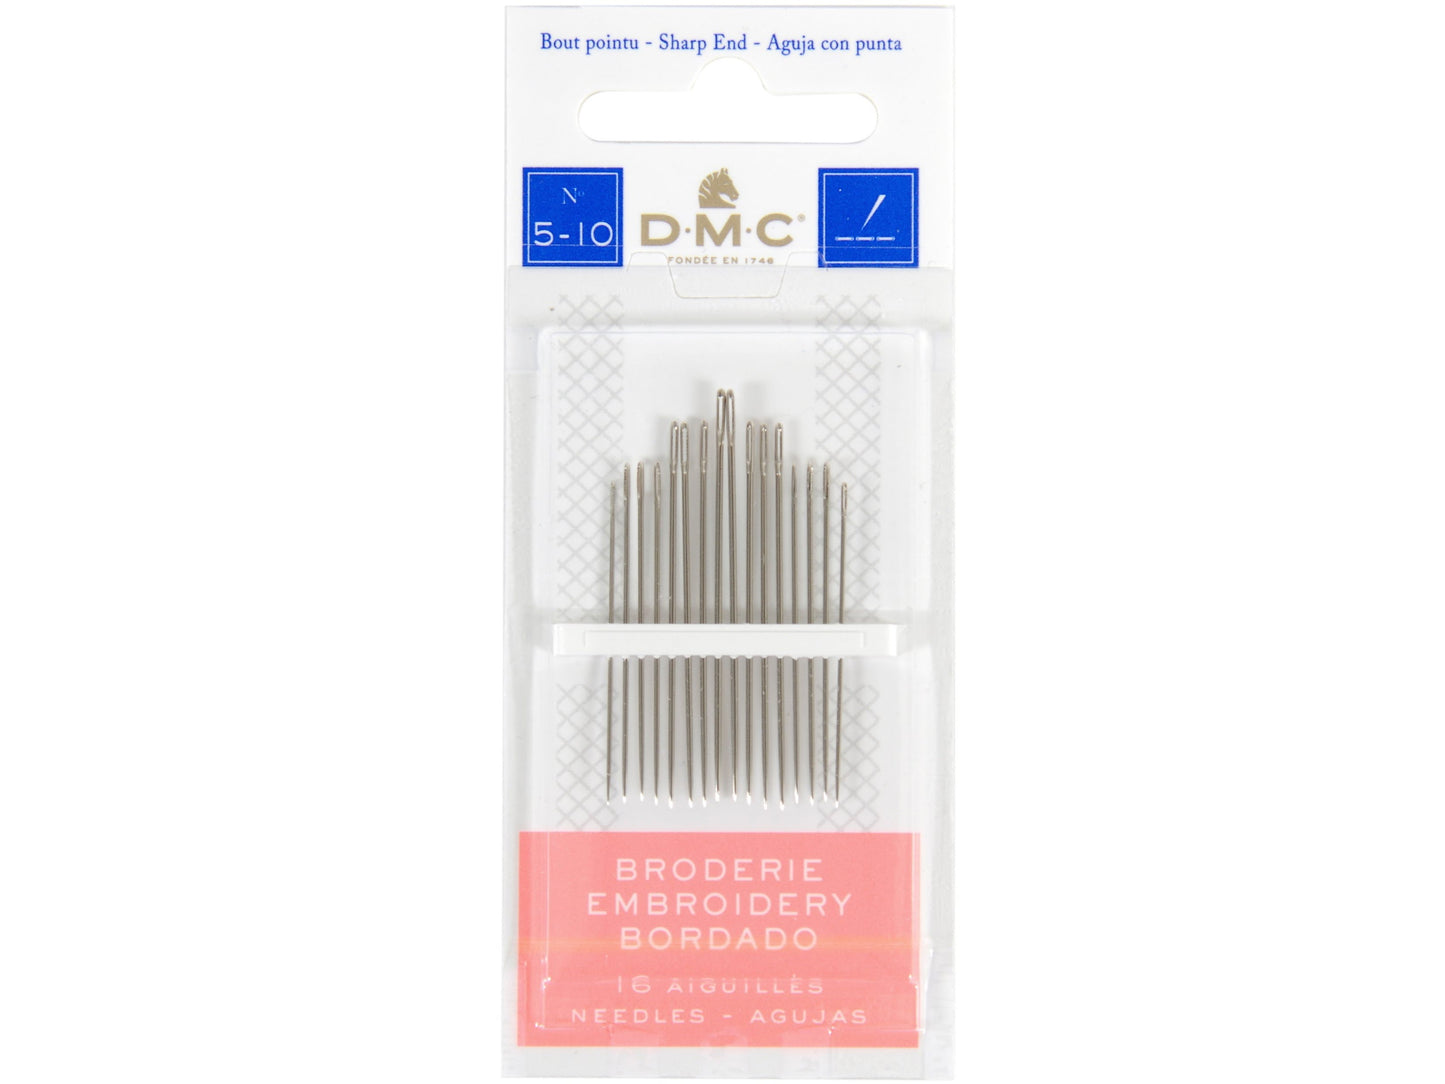 DMC Embroidery Hand Needles - Size 5/10 16pcs